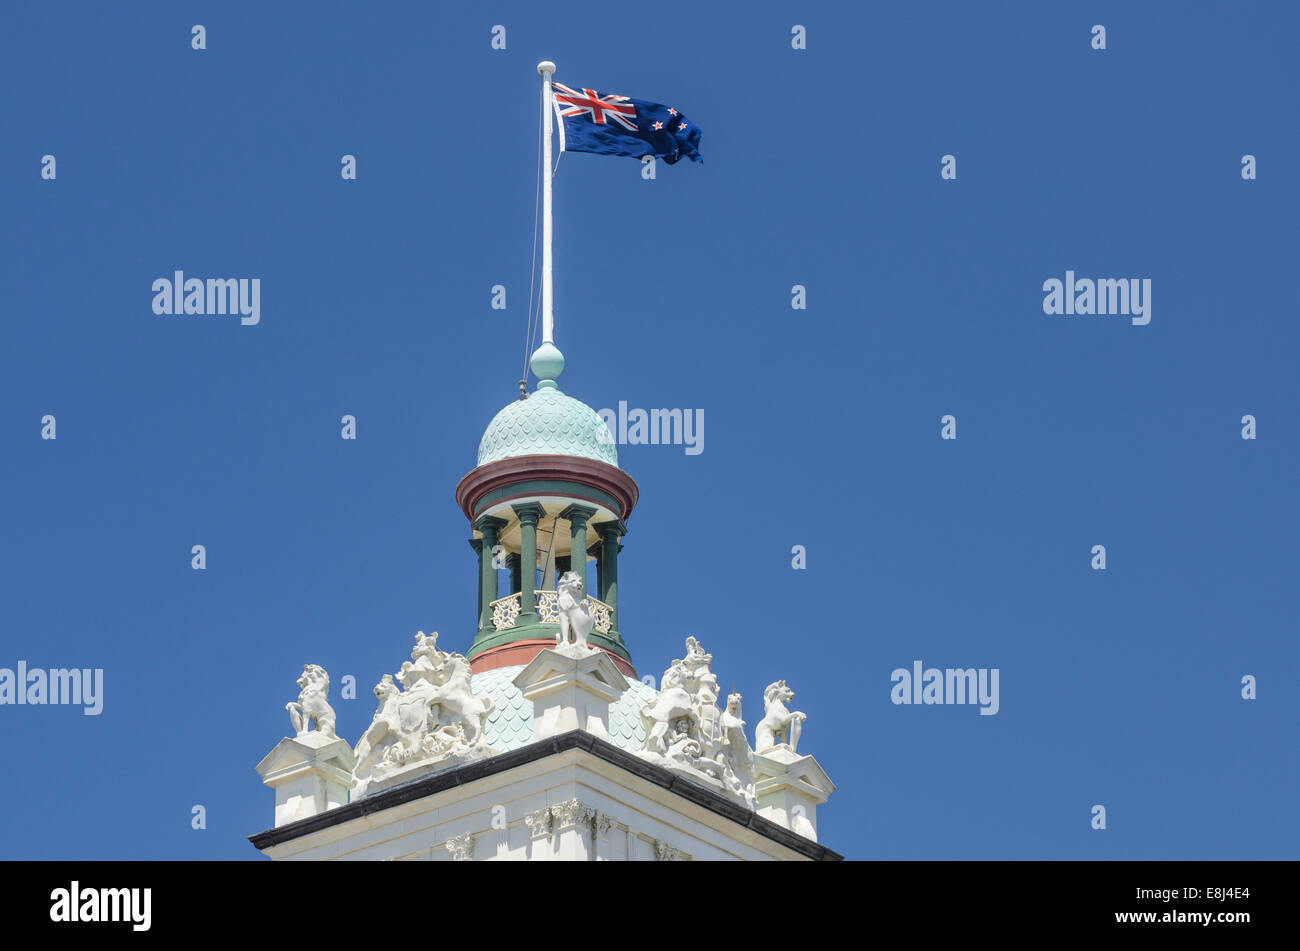 Station tower with New Zealand flag, Dunedin, South Island, New Zealand Stock Photo